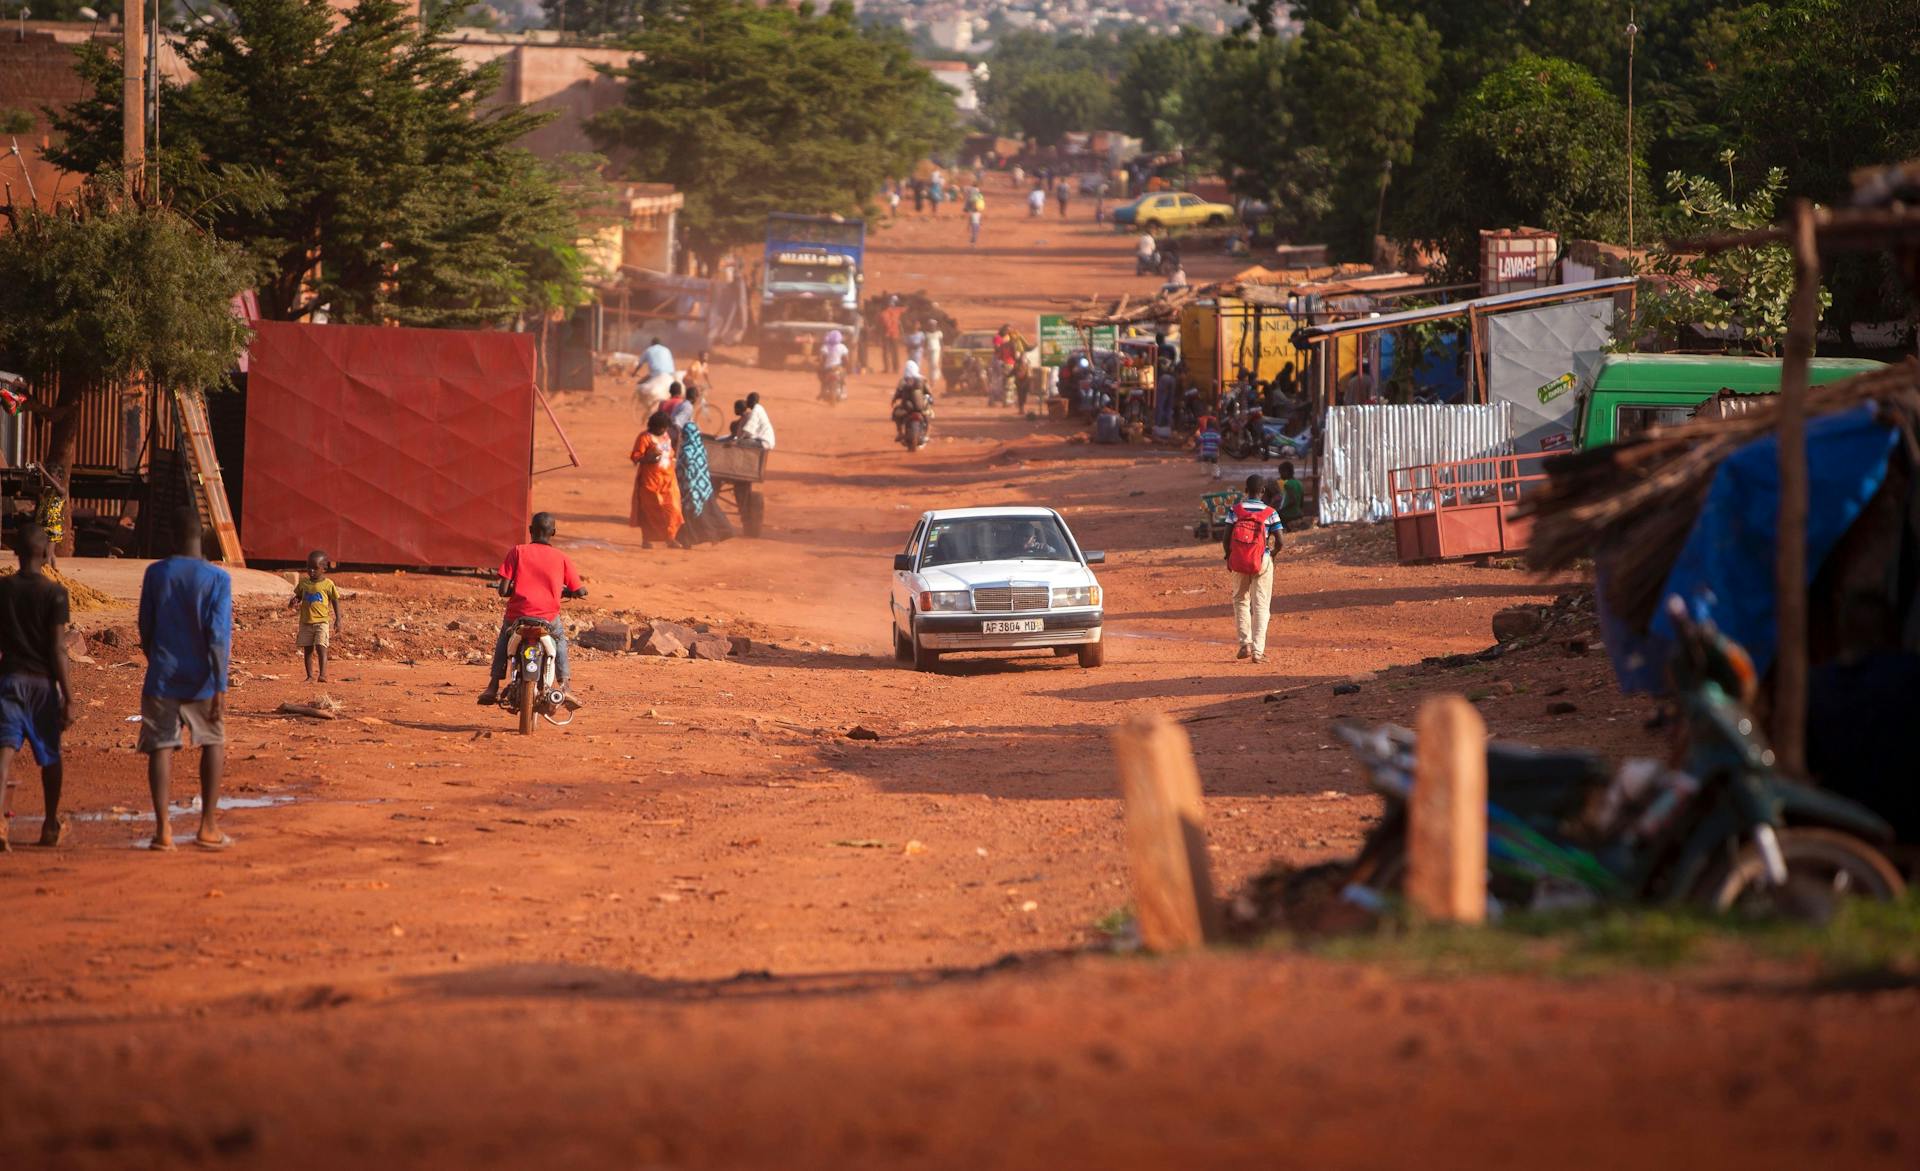 De stad Gao in Mali. Foto Ministerie van Defensie 